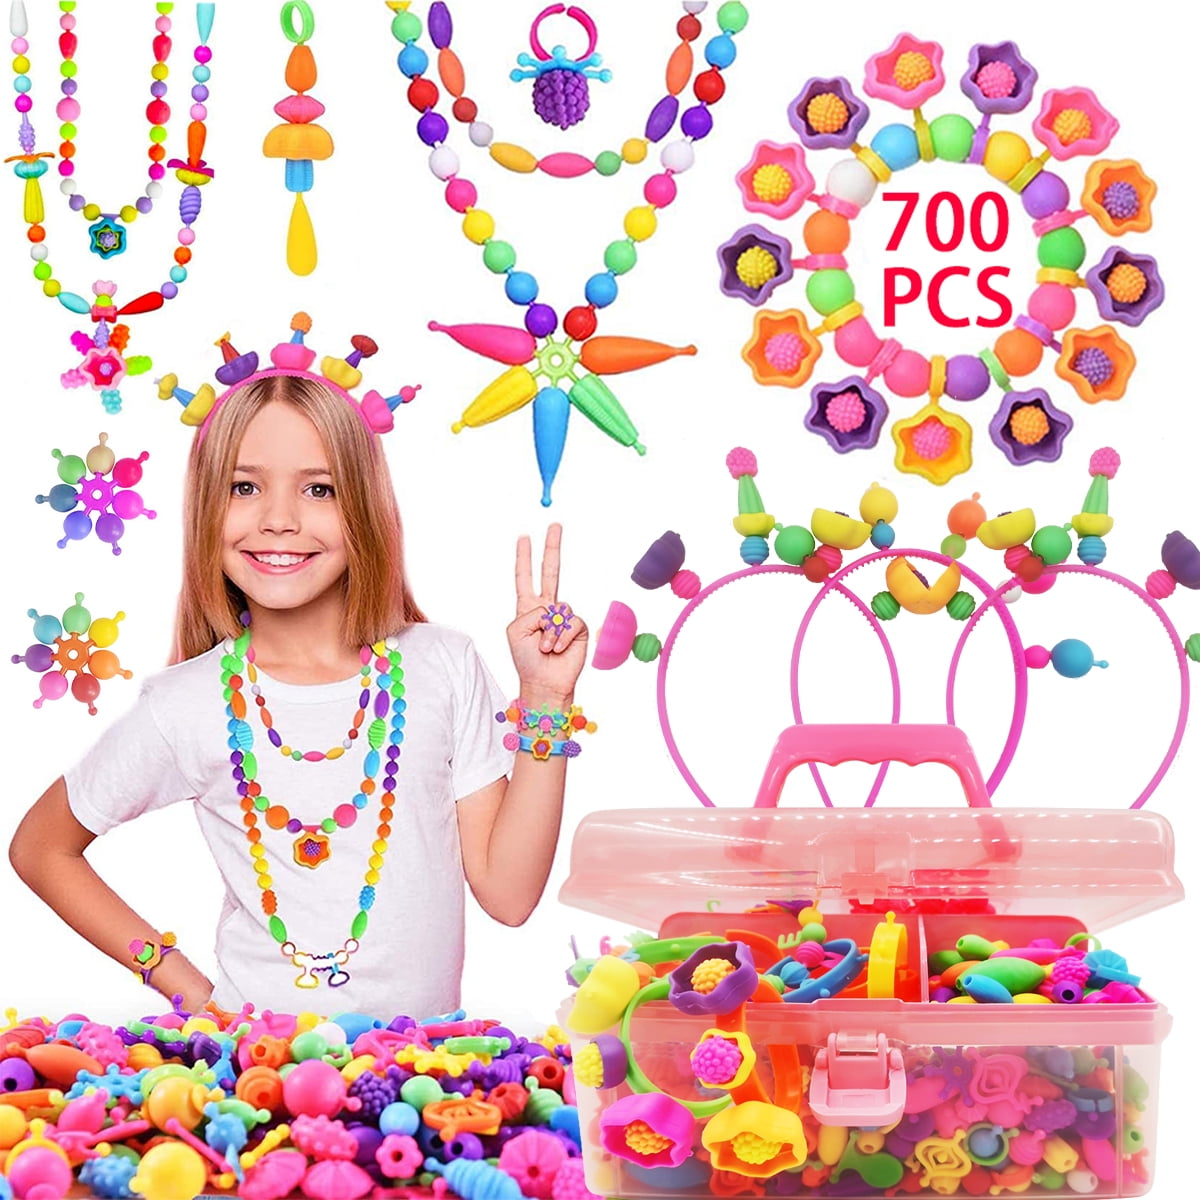 PURPLE LADYBUG Design Your Own Jewelry Box Kids Craft Kit - DIY Jewelry Box  for Girls 8-12, & Fun Girls Arts & Crafts Age 6-8 & Up - Great Birthday 